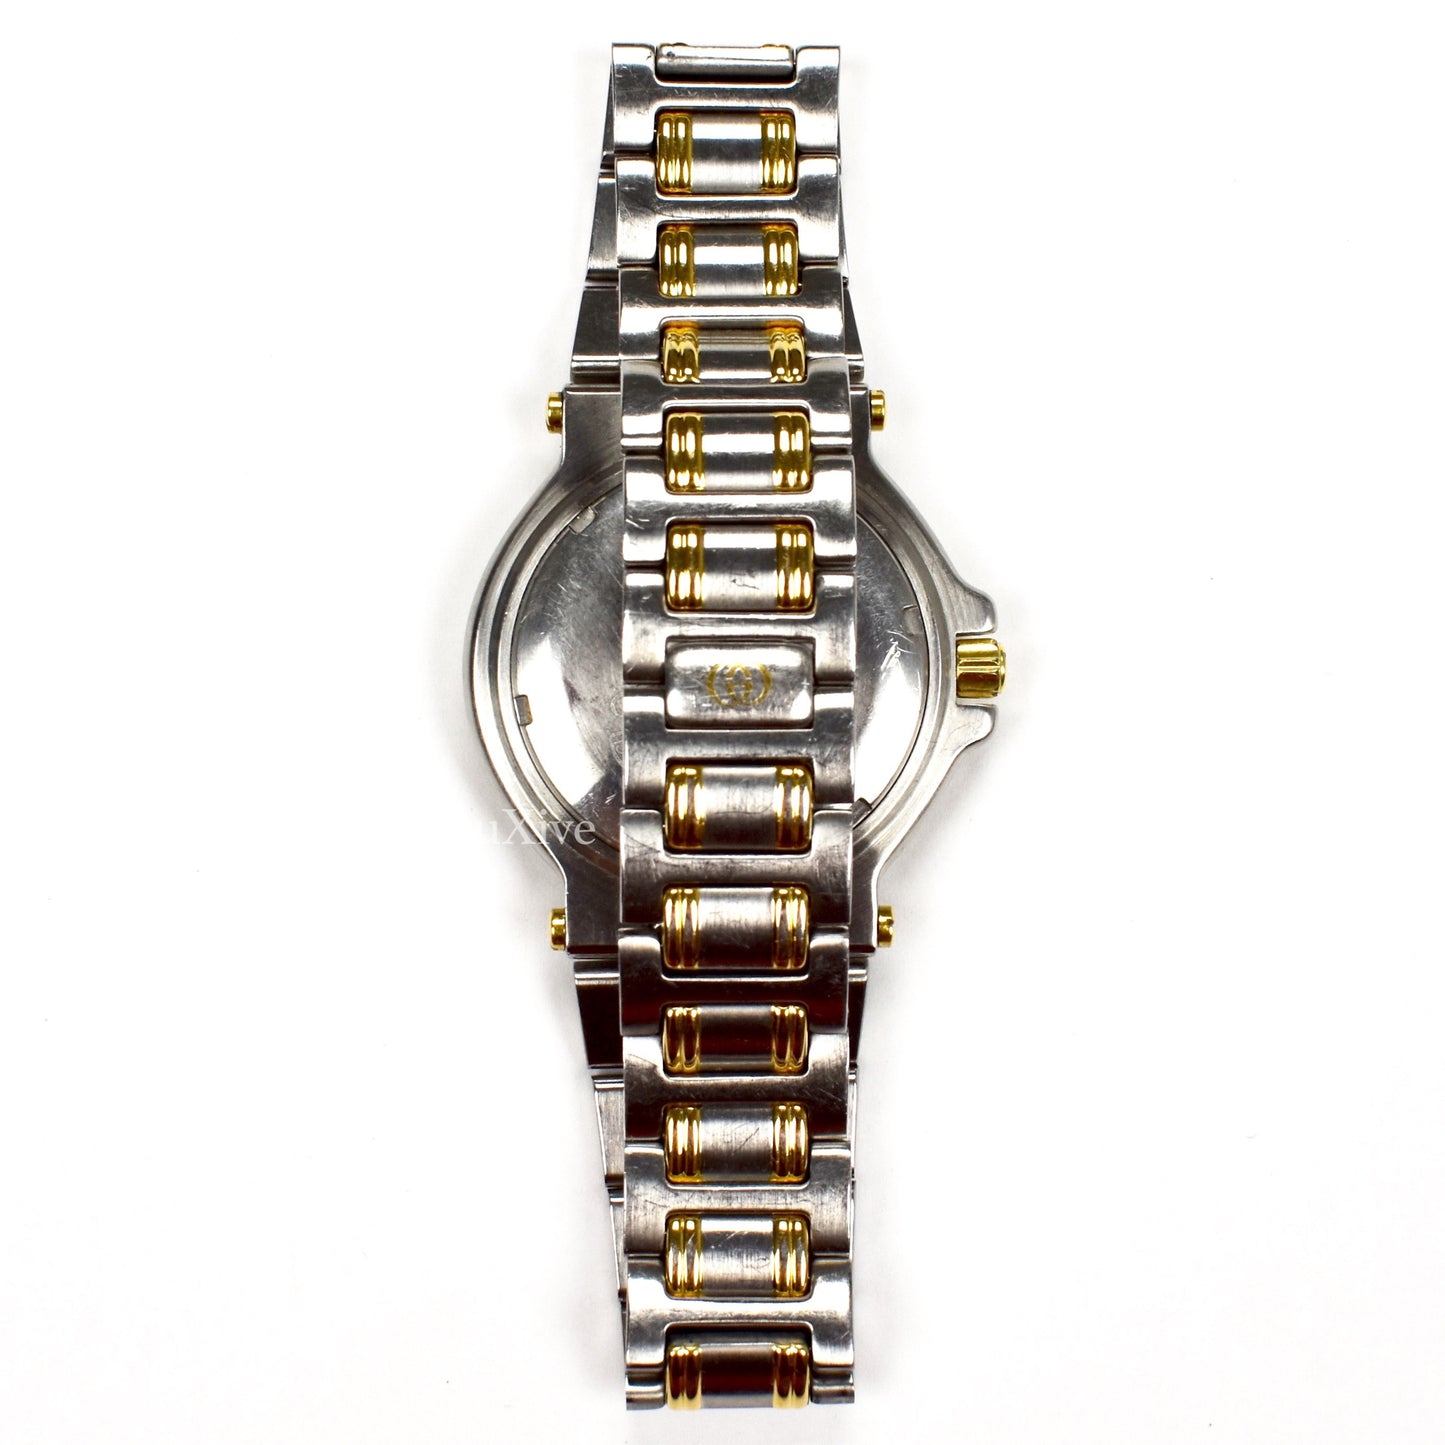 Gucci - 9700M Gold/Steel Green Bezel Watch